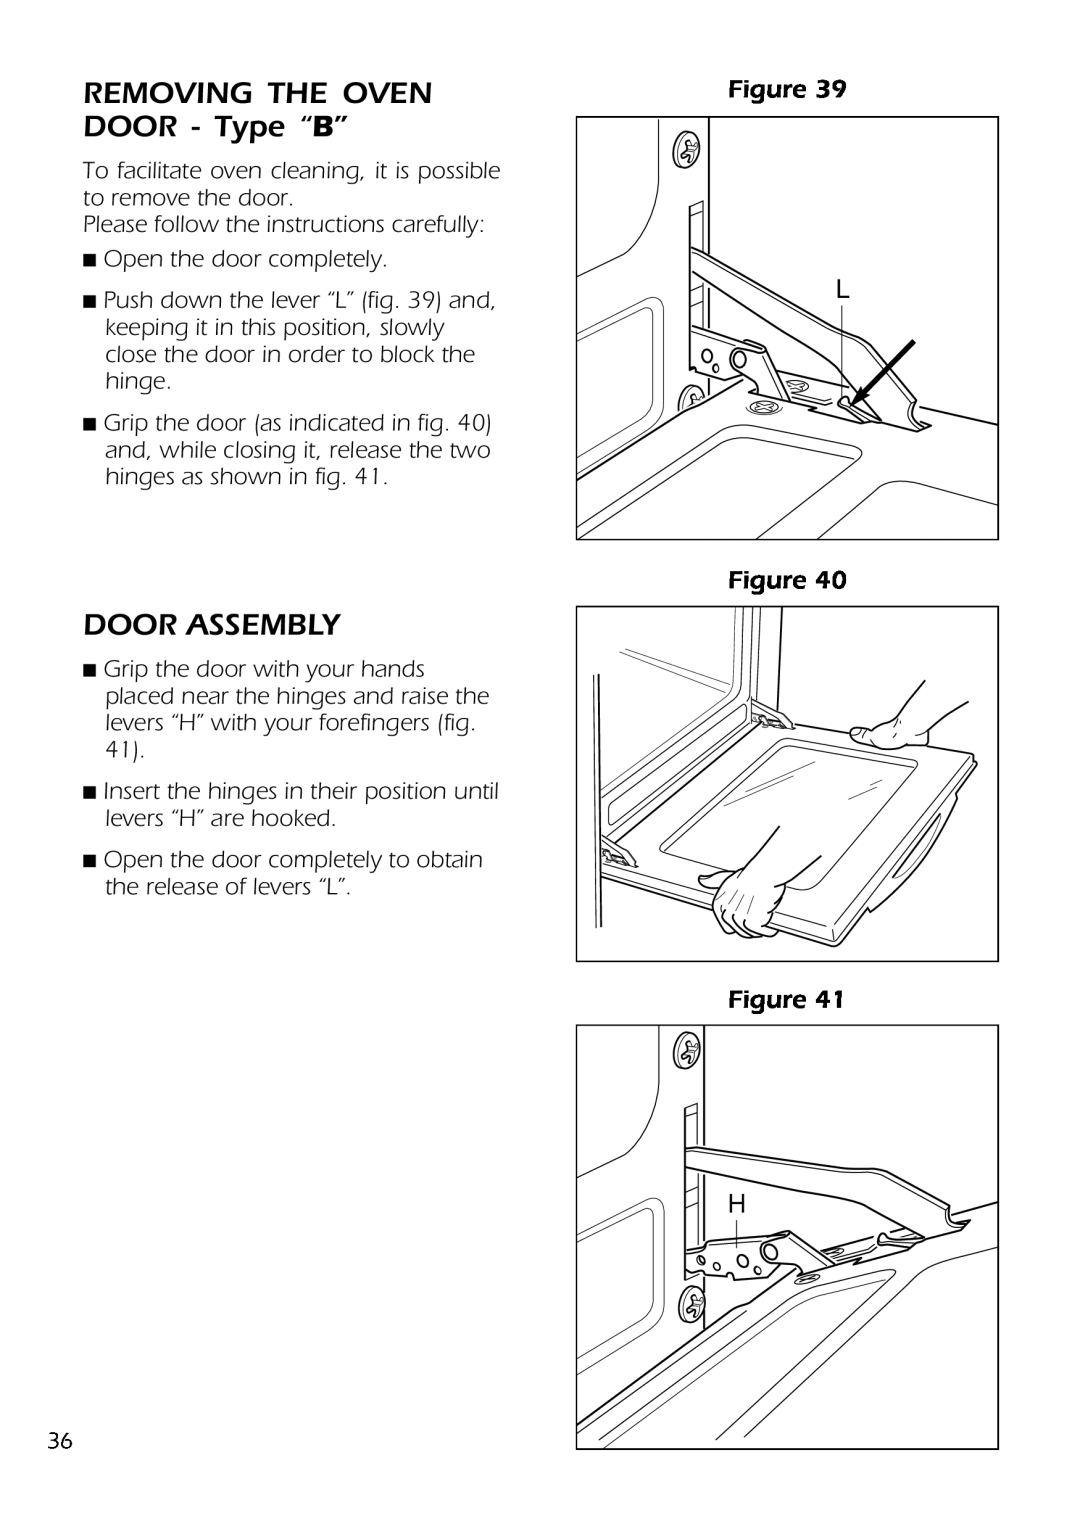 DeLonghi DS 61 GW manual REMOVING THE OVEN DOOR - Type “B”, Door Assembly 